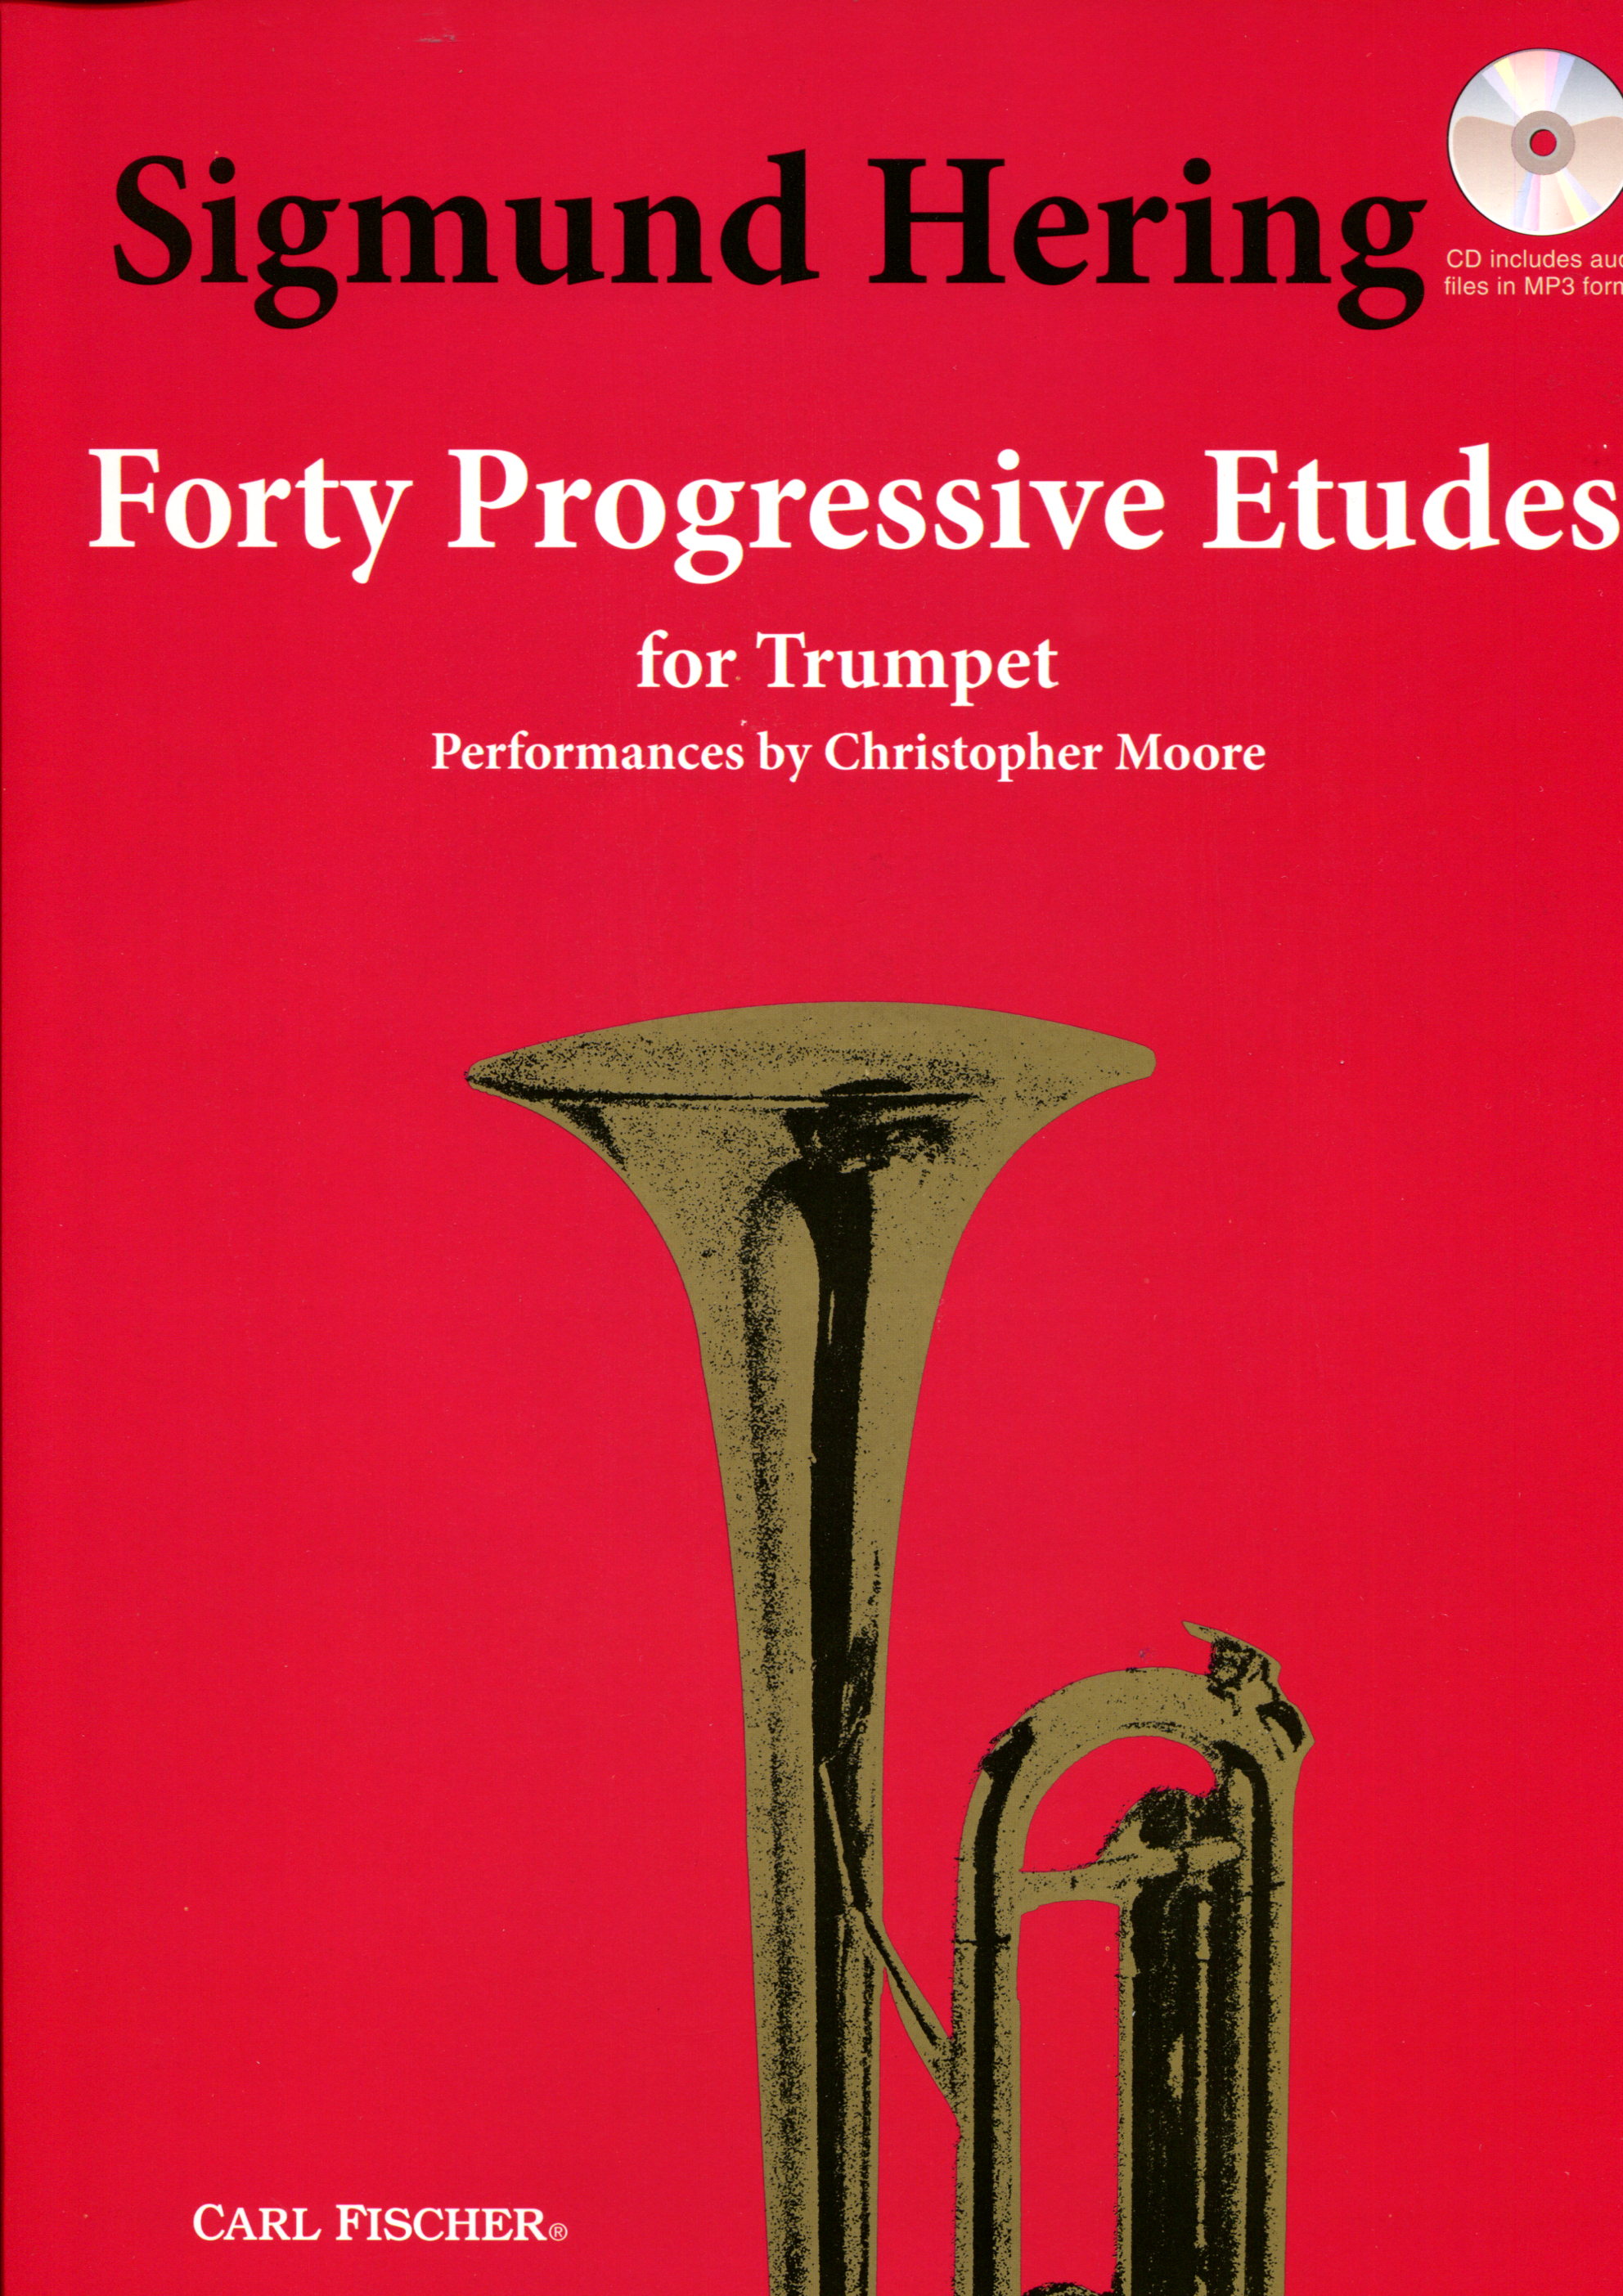 40 Progressive Etudes - Hering, Trompete MP3